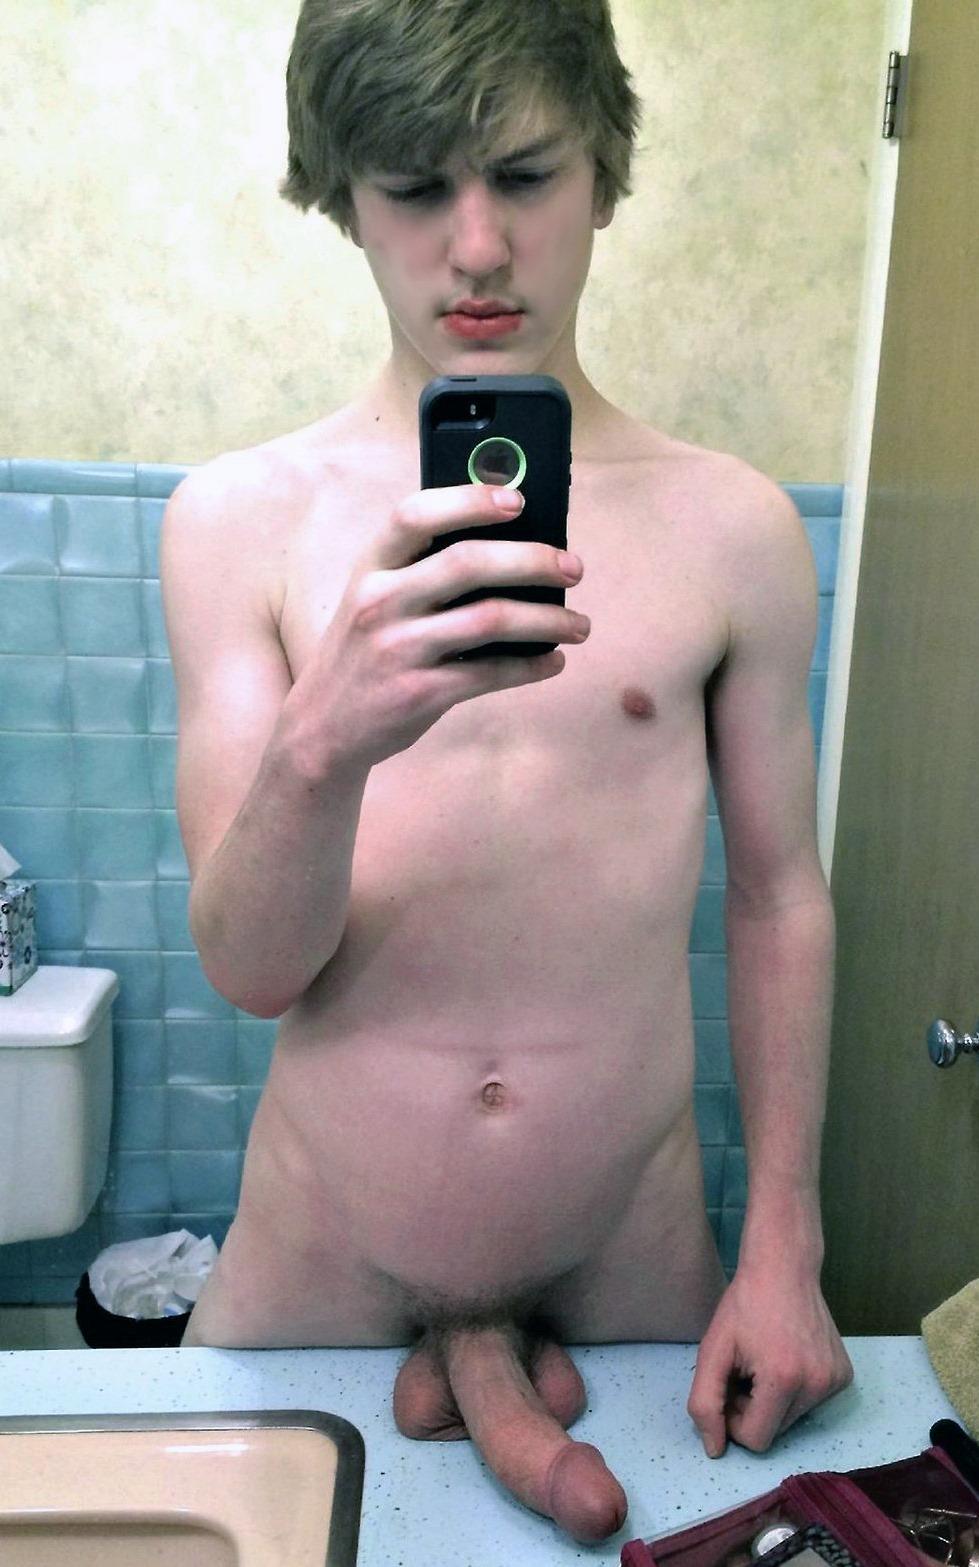 best of Selfies girl Teenage naked pic boy and